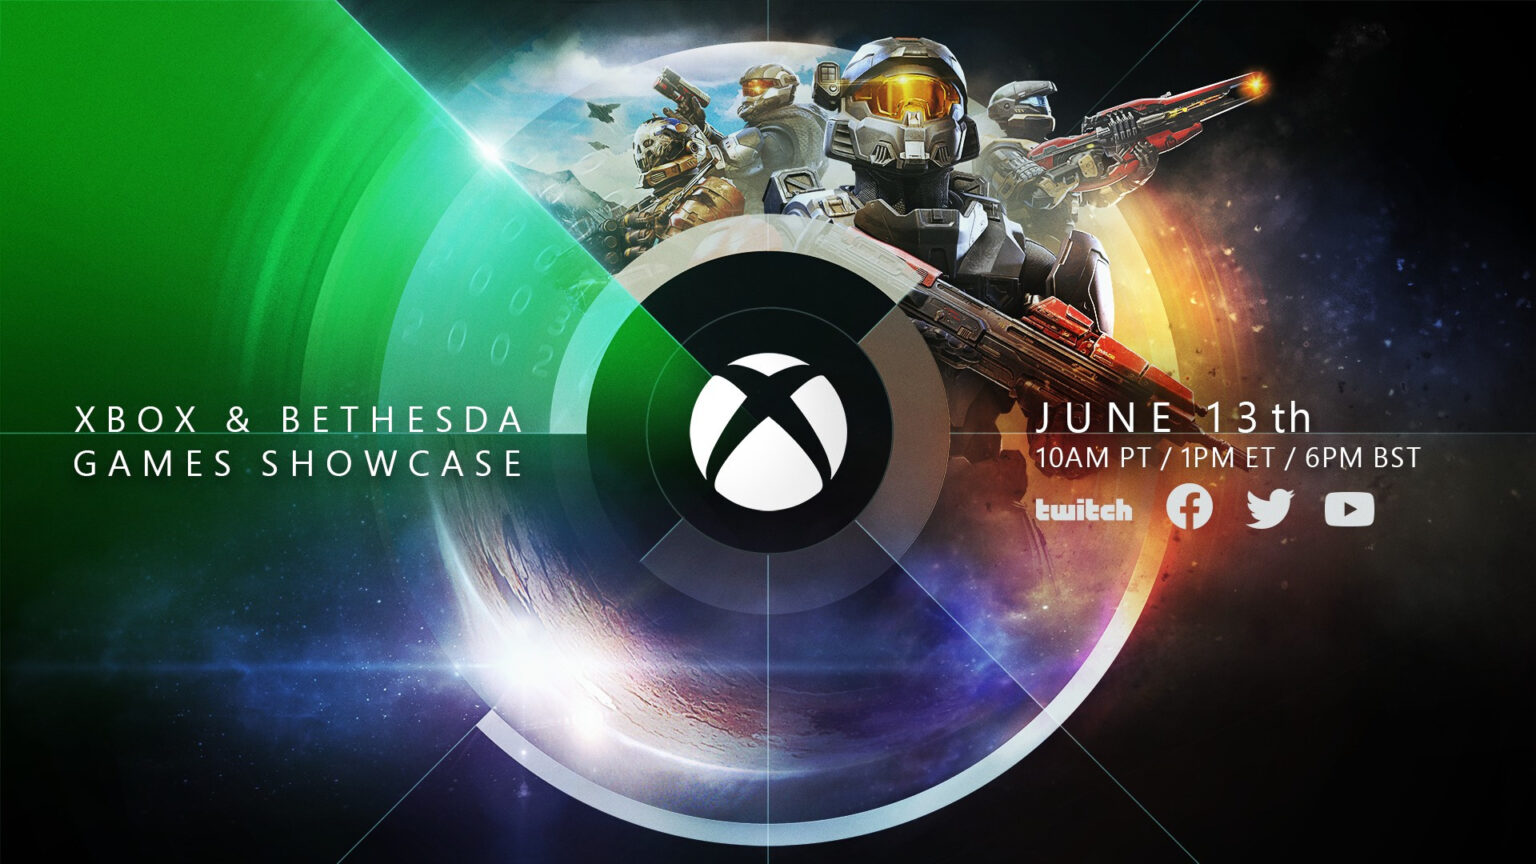 Xbox & Bethesda Game Showcase Announced